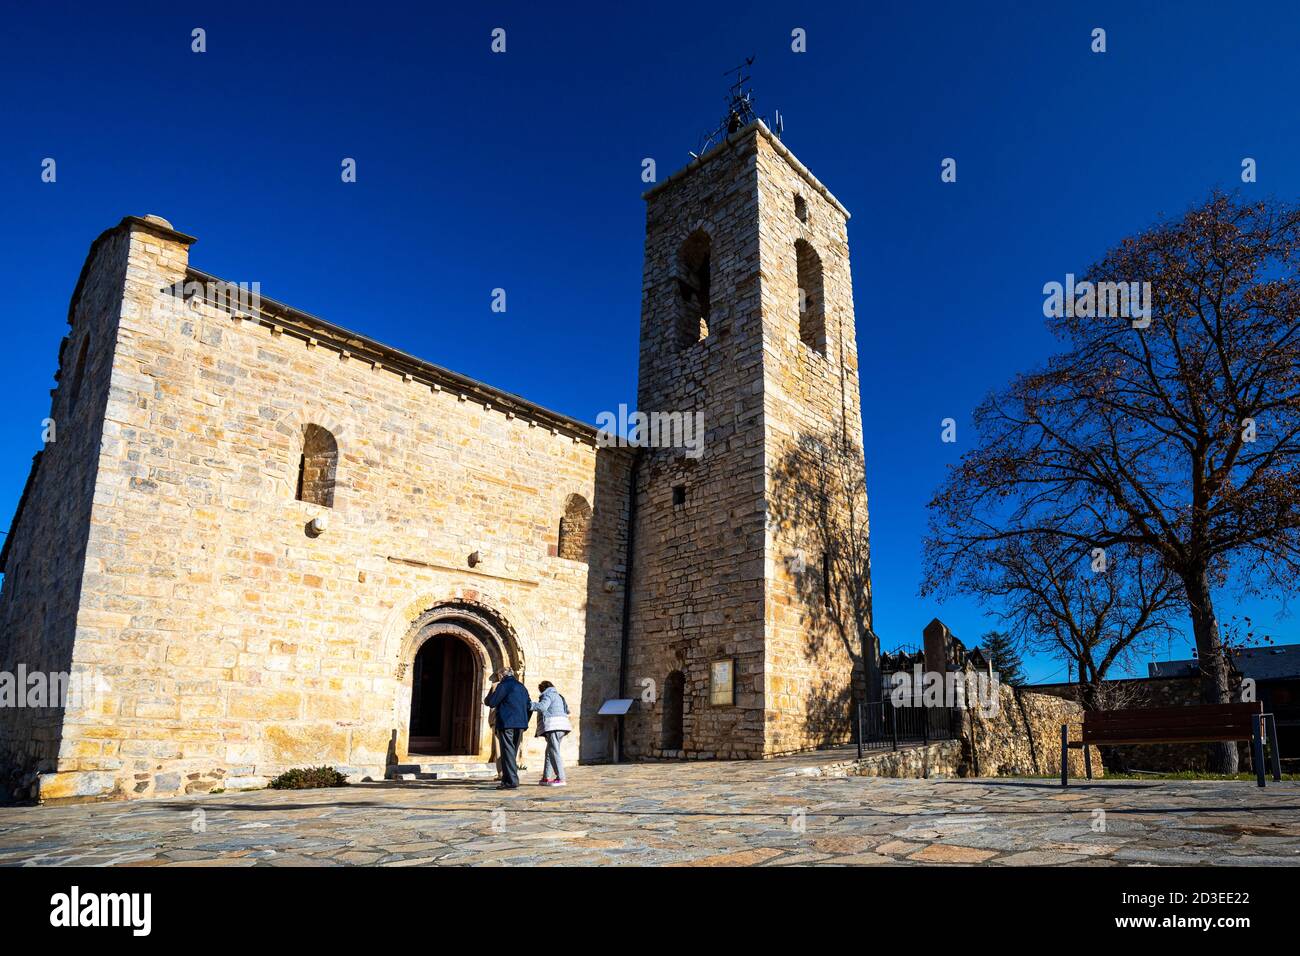 All church bell tower, Cerdanya. Stock Photo